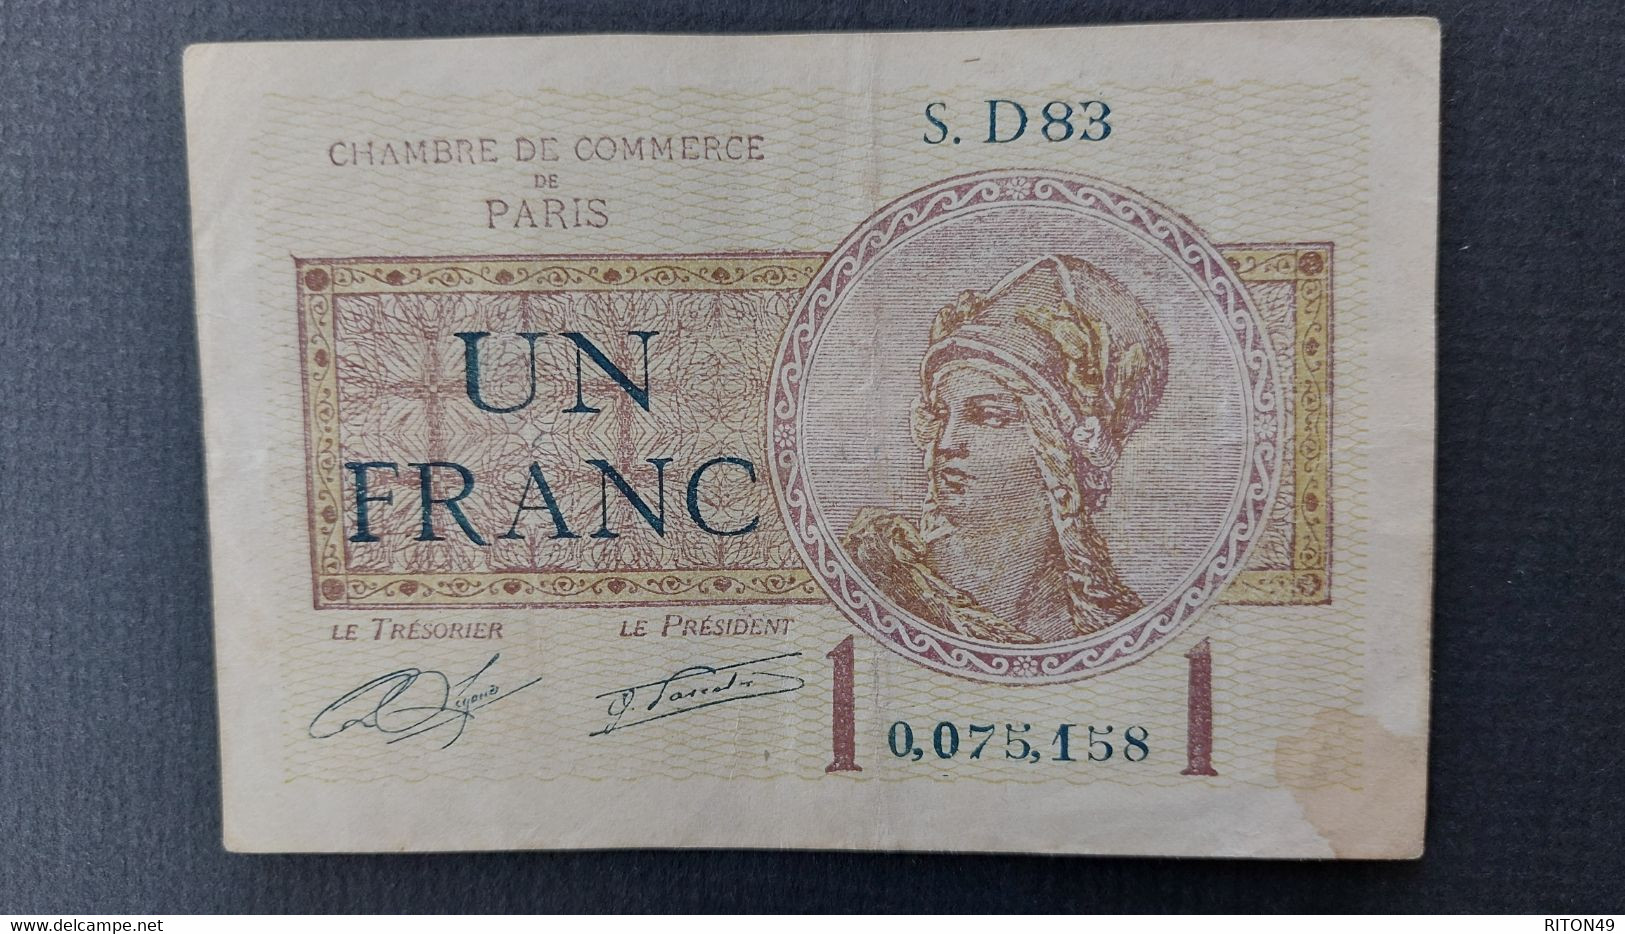 BILLET 1922 FRANCE UN FRANC - Ohne Zuordnung